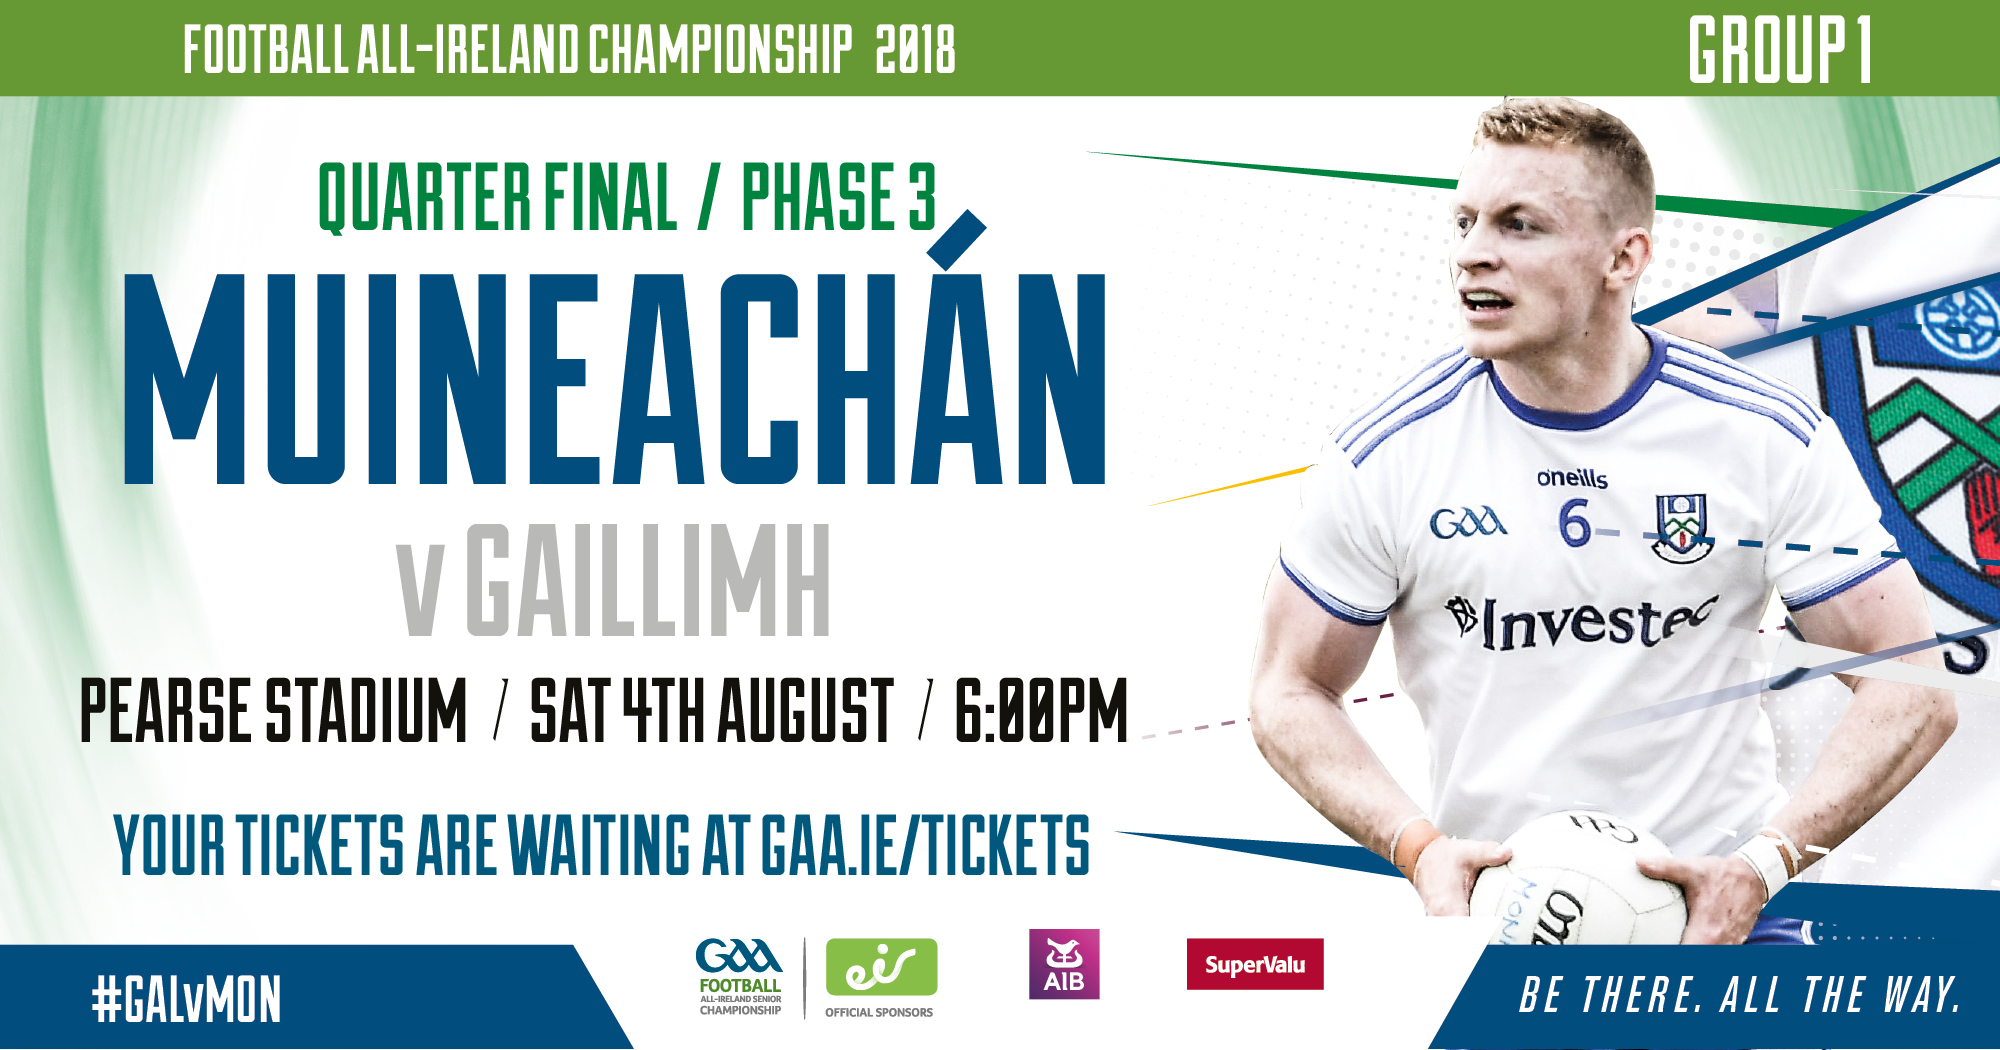 Monaghan v Galway Ticket Details